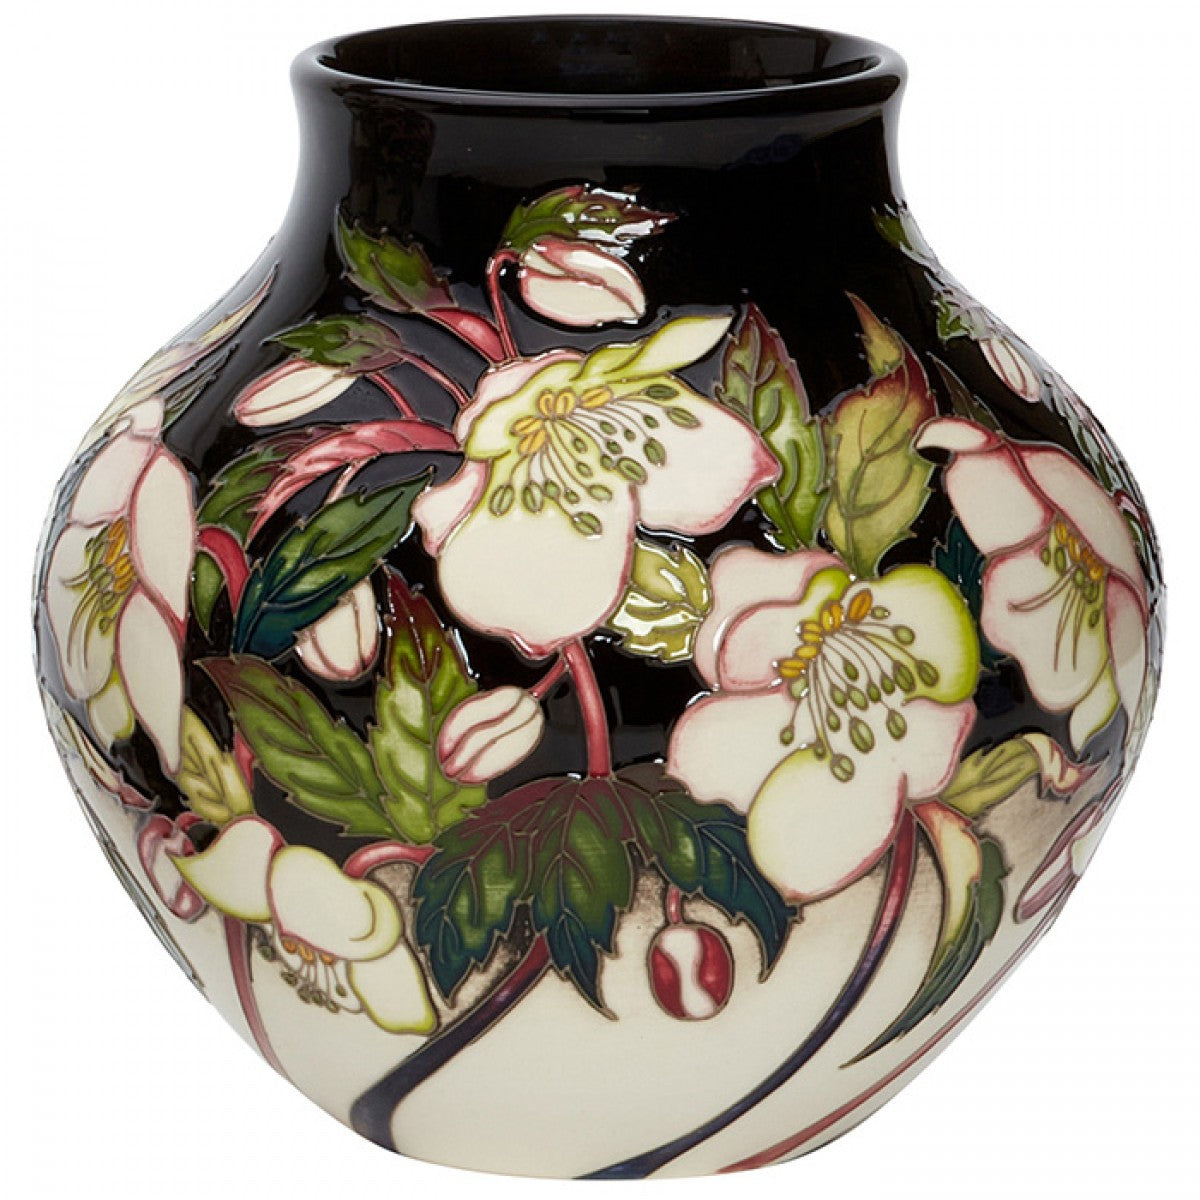 Perfect Harmony Vase 35/7 Limited Edition